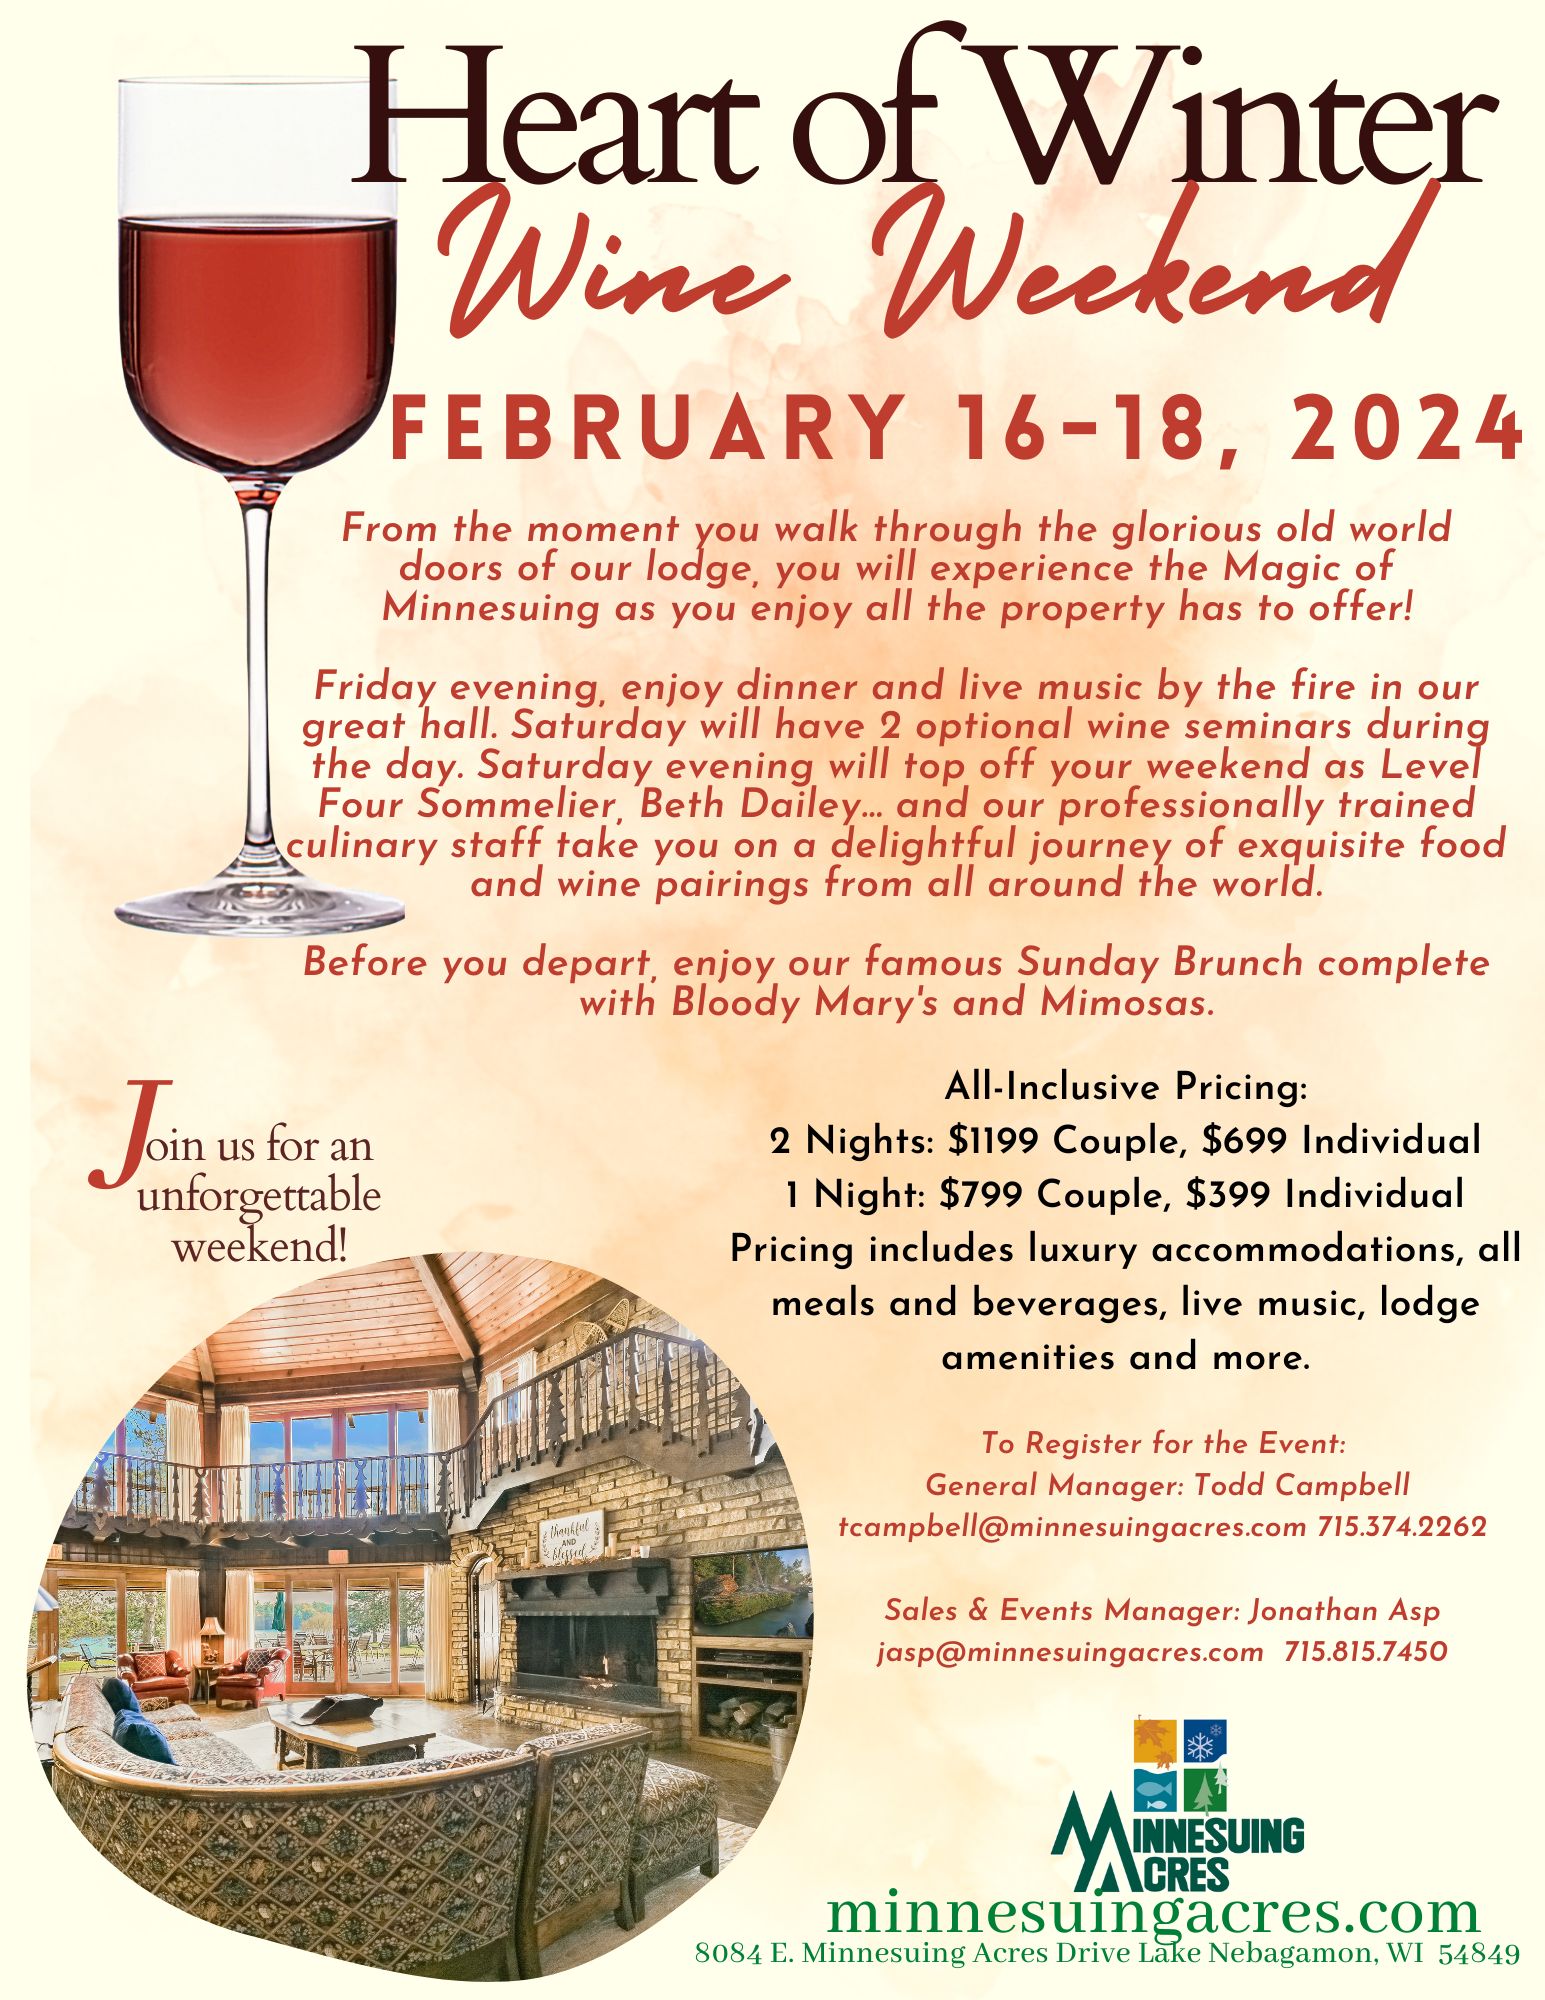 A brochure for Heart of Winter Wine Weekend